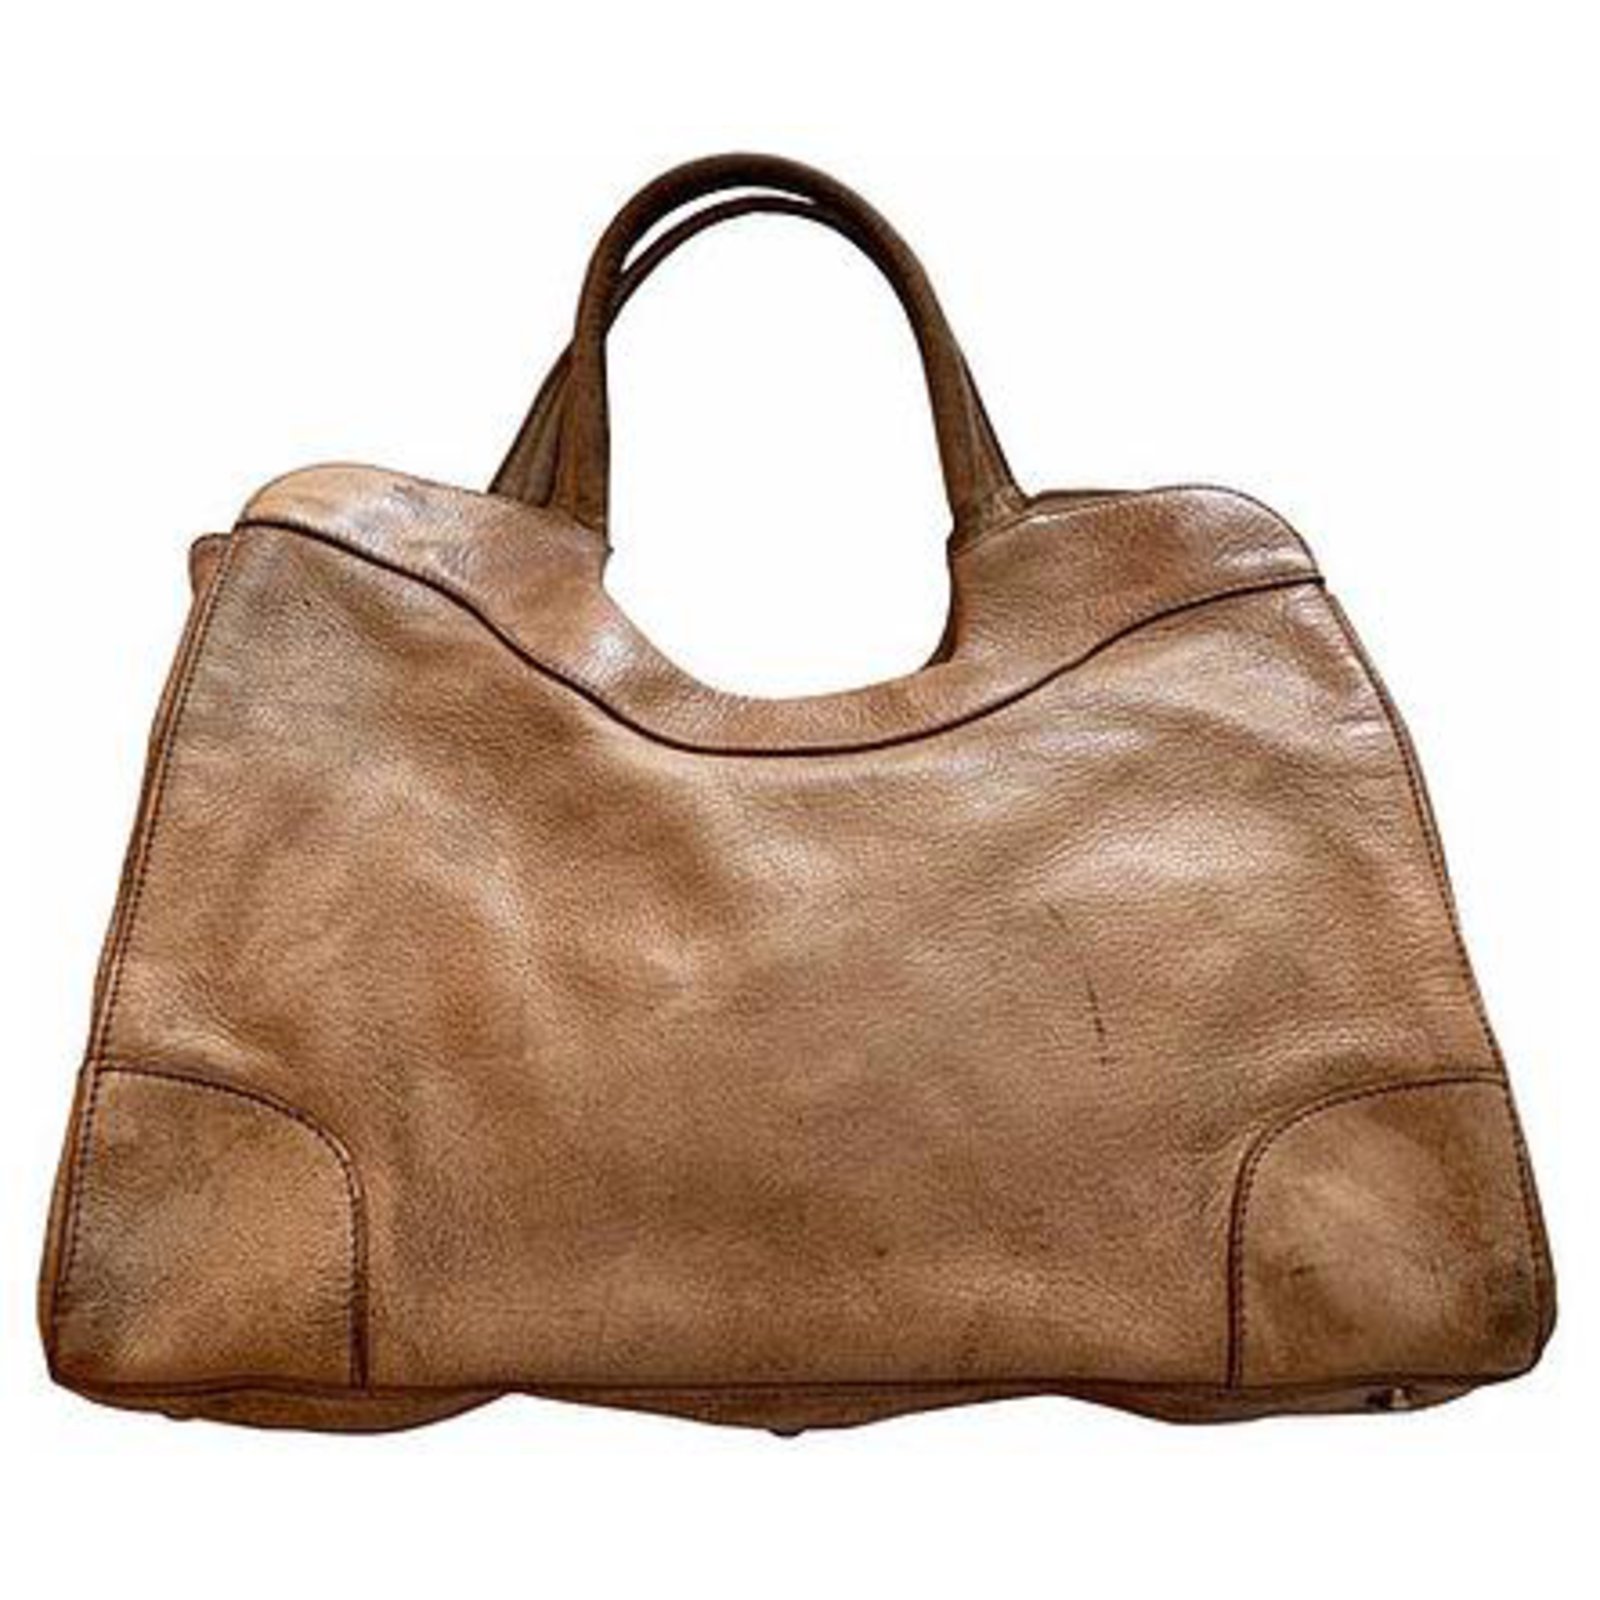 Vintage furla leather purse | Leather purses, Leather, Purses